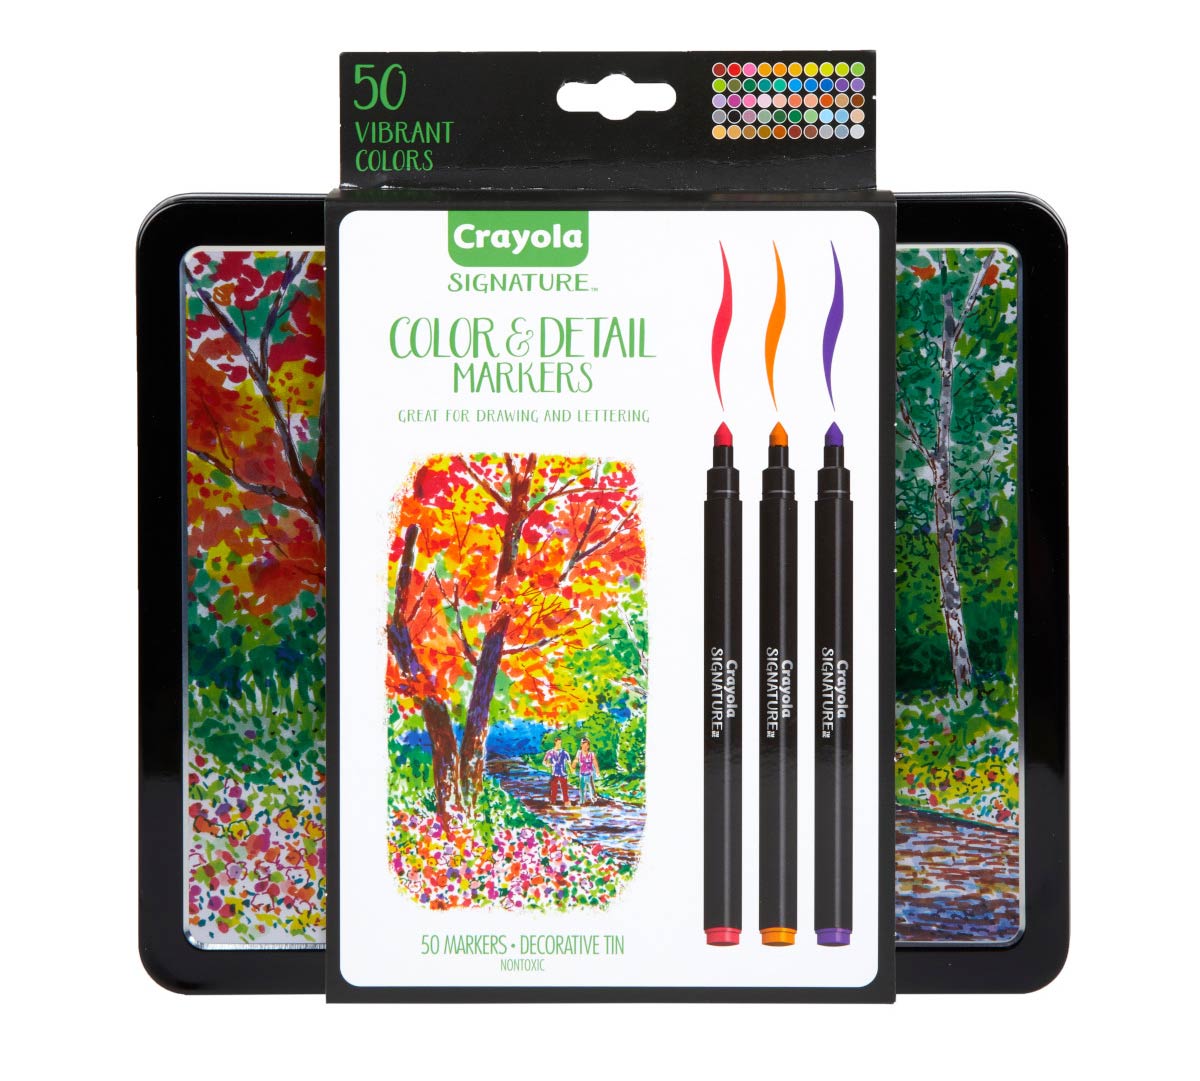 https://shop.crayola.com/on/demandware.static/-/Sites-crayola-storefront/default/dw82803b9a/images/58-6750-0-200_Signature_Color-&-Detail-Markers_50ct_F1.jpg